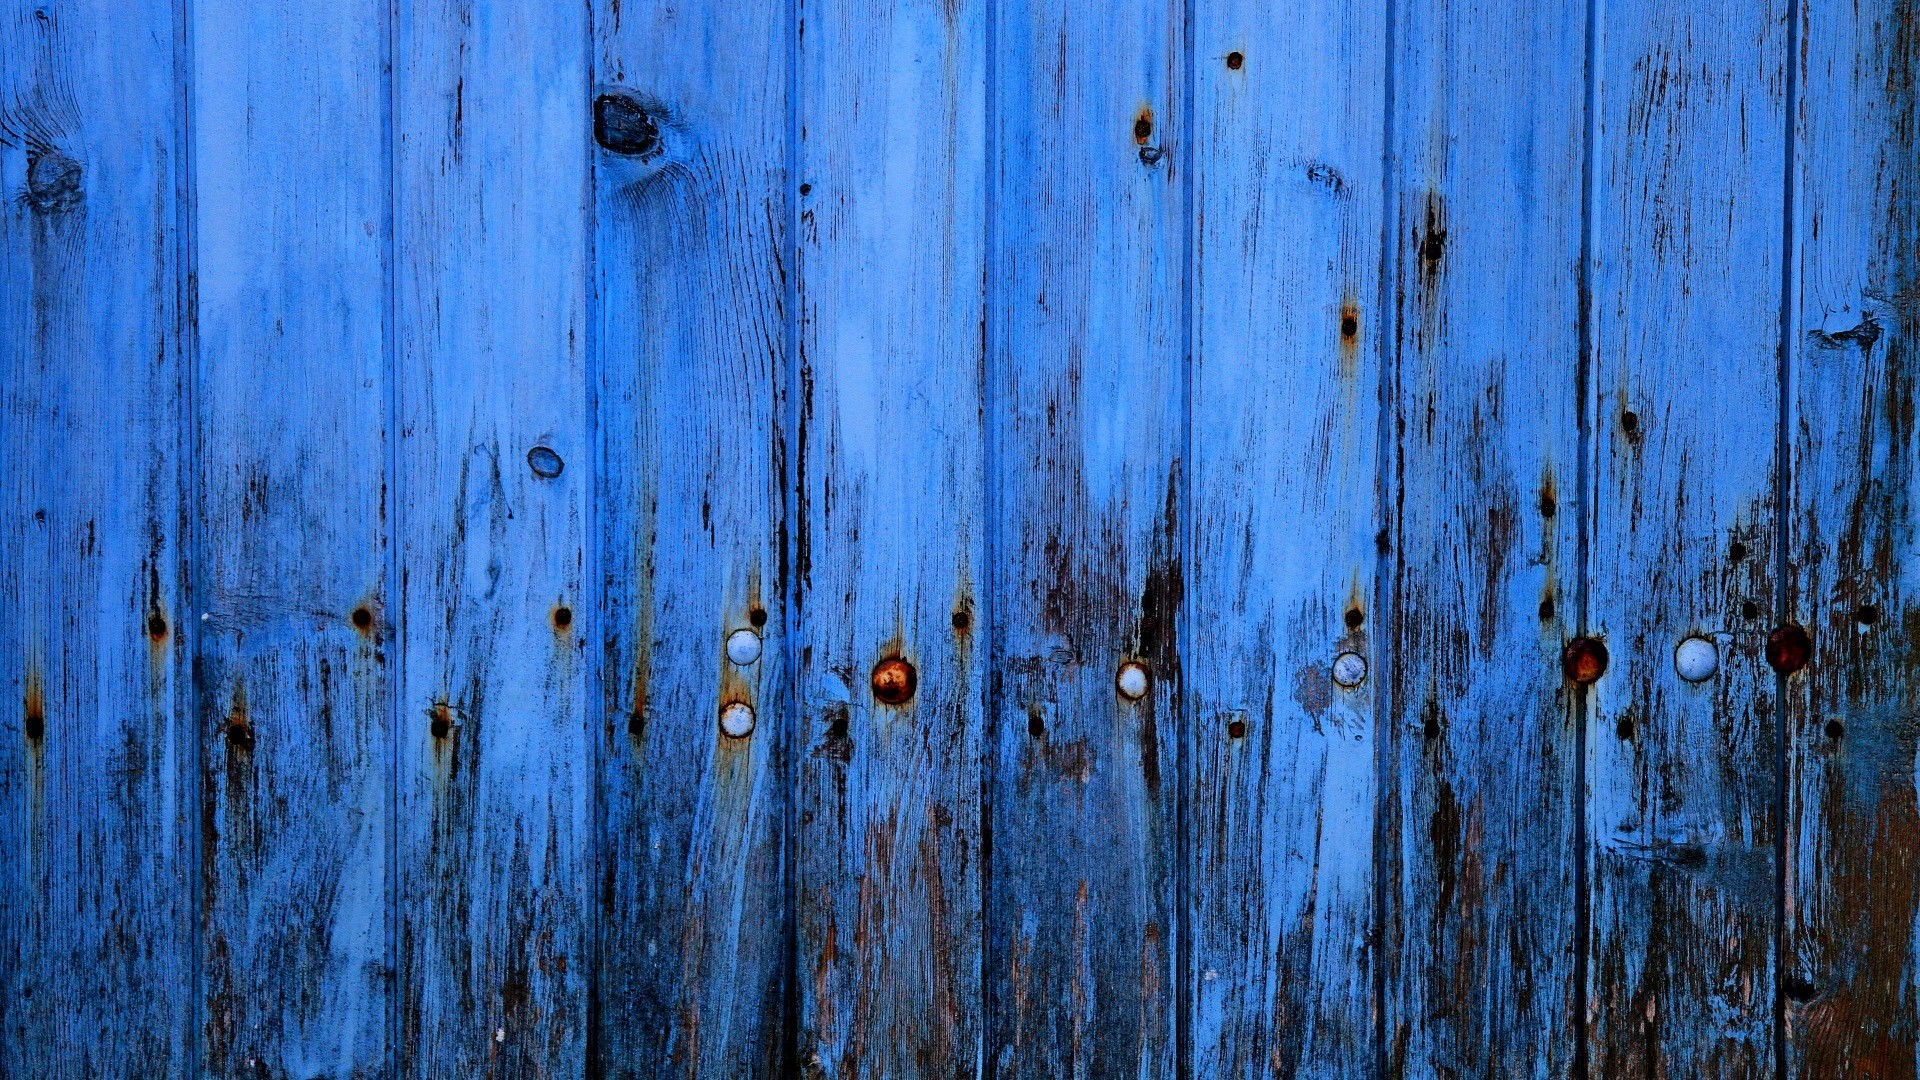 General 1920x1080 minimalism texture wood wooden surface blue planks thread metal rust